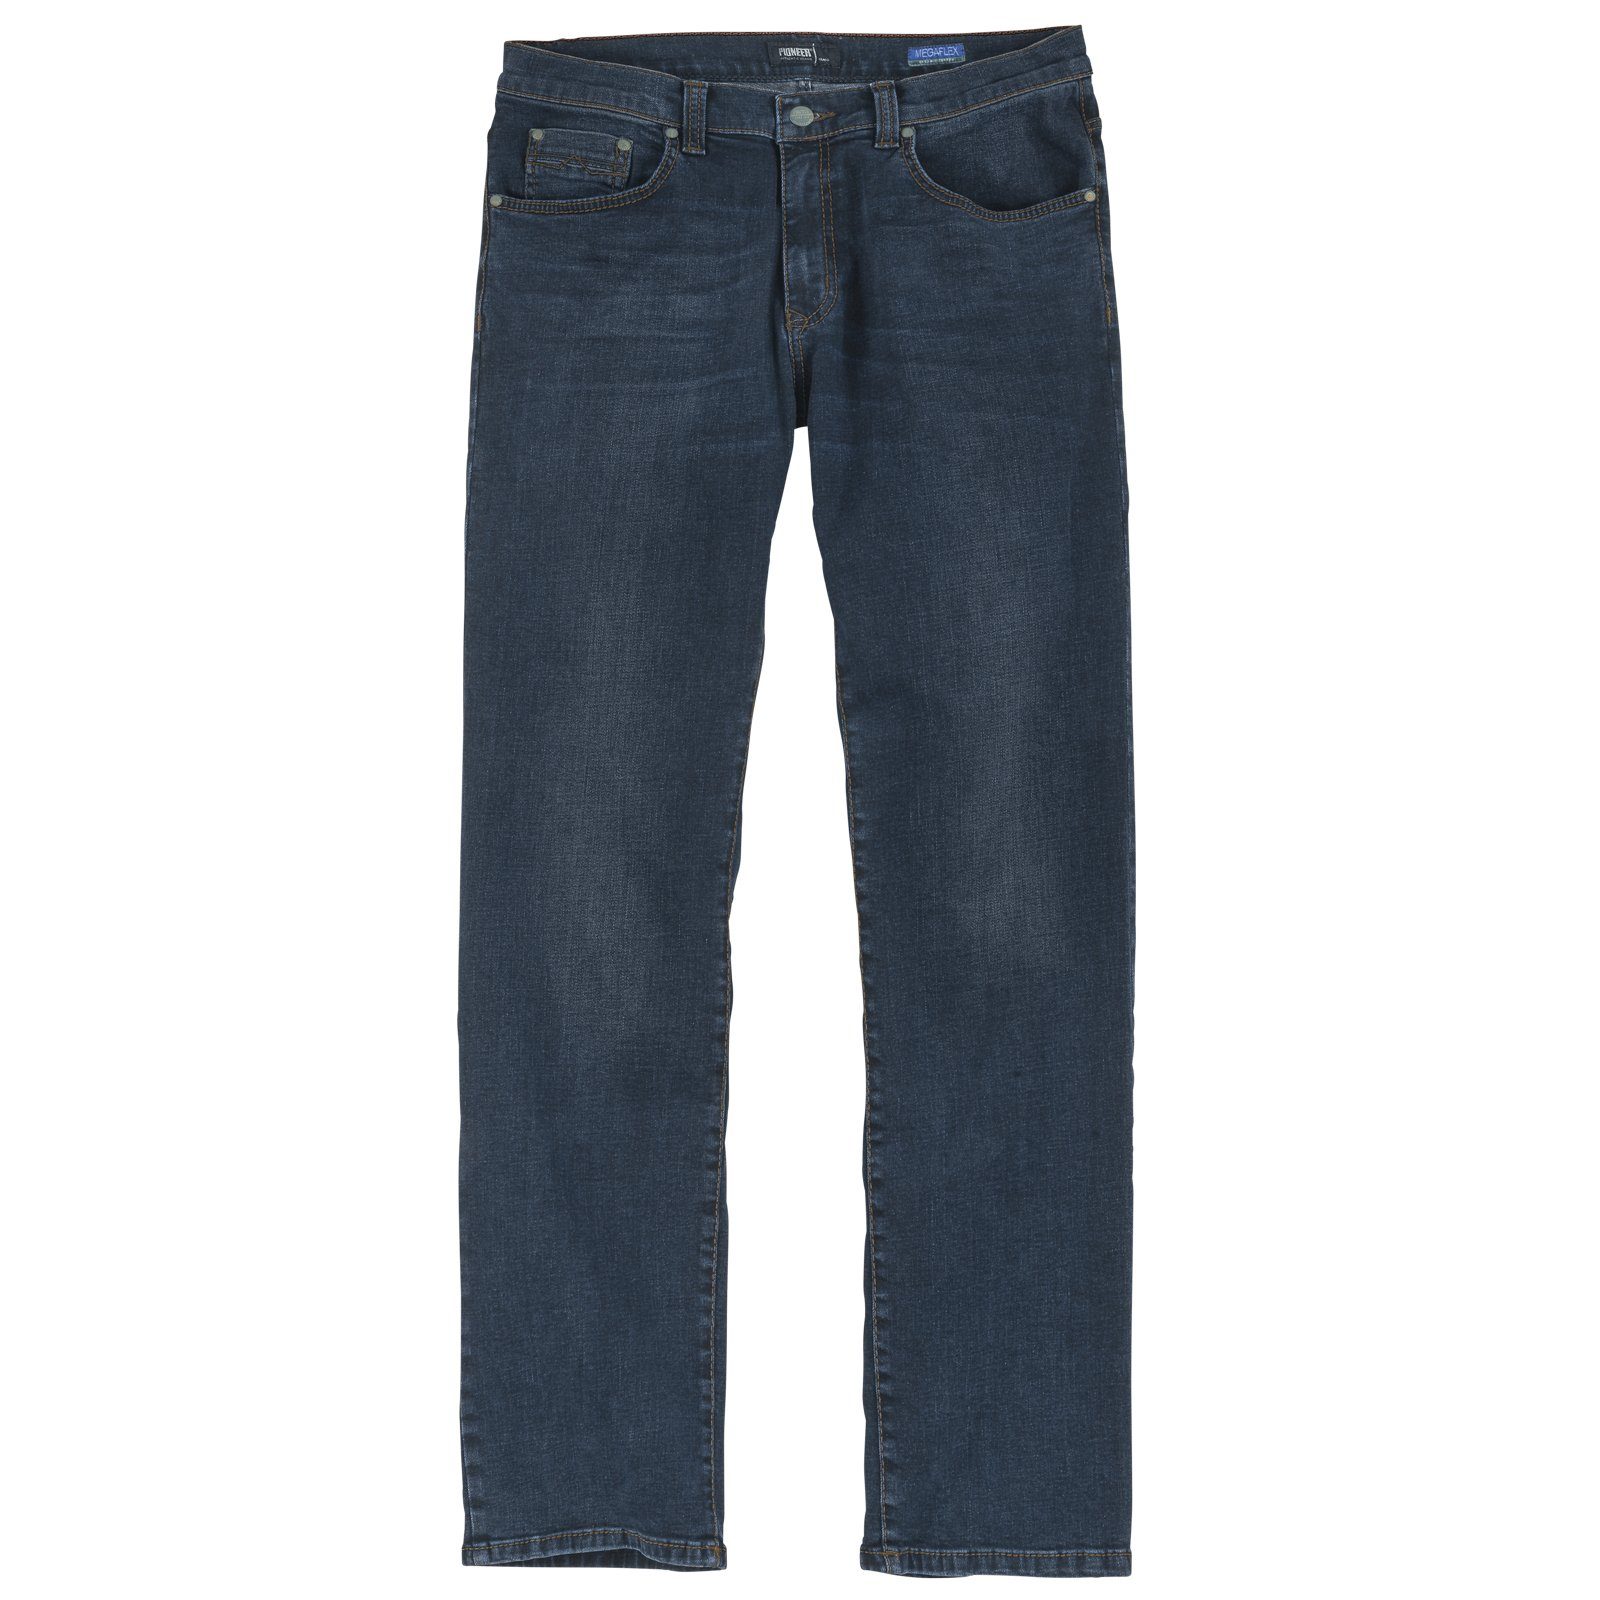 Große Pionier Jeans blue/black mustache Stretch-Jeans Rando used Pioneer Bequeme Größen